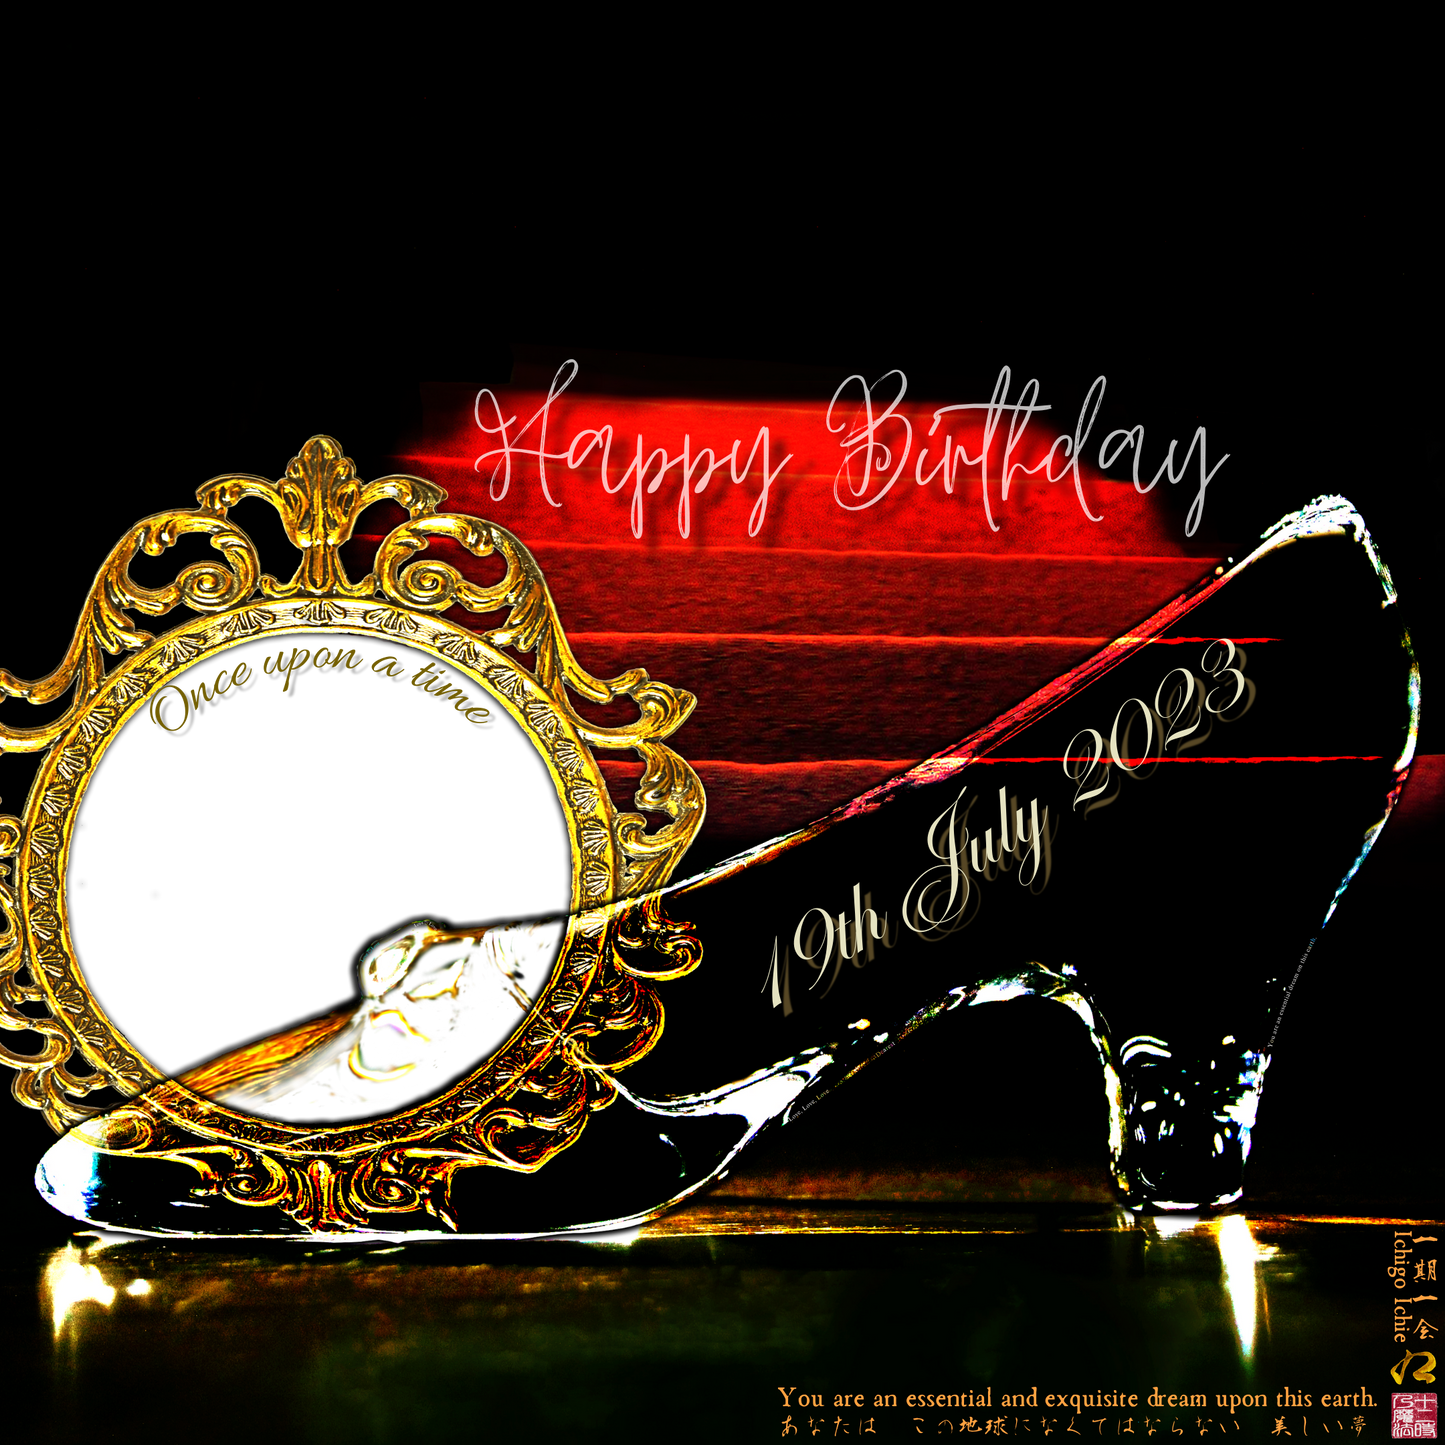 Happy Birthday Glass Slipper "Ichigo Ichie" 19th July 2023 the Left (1-of-1) NFT Art